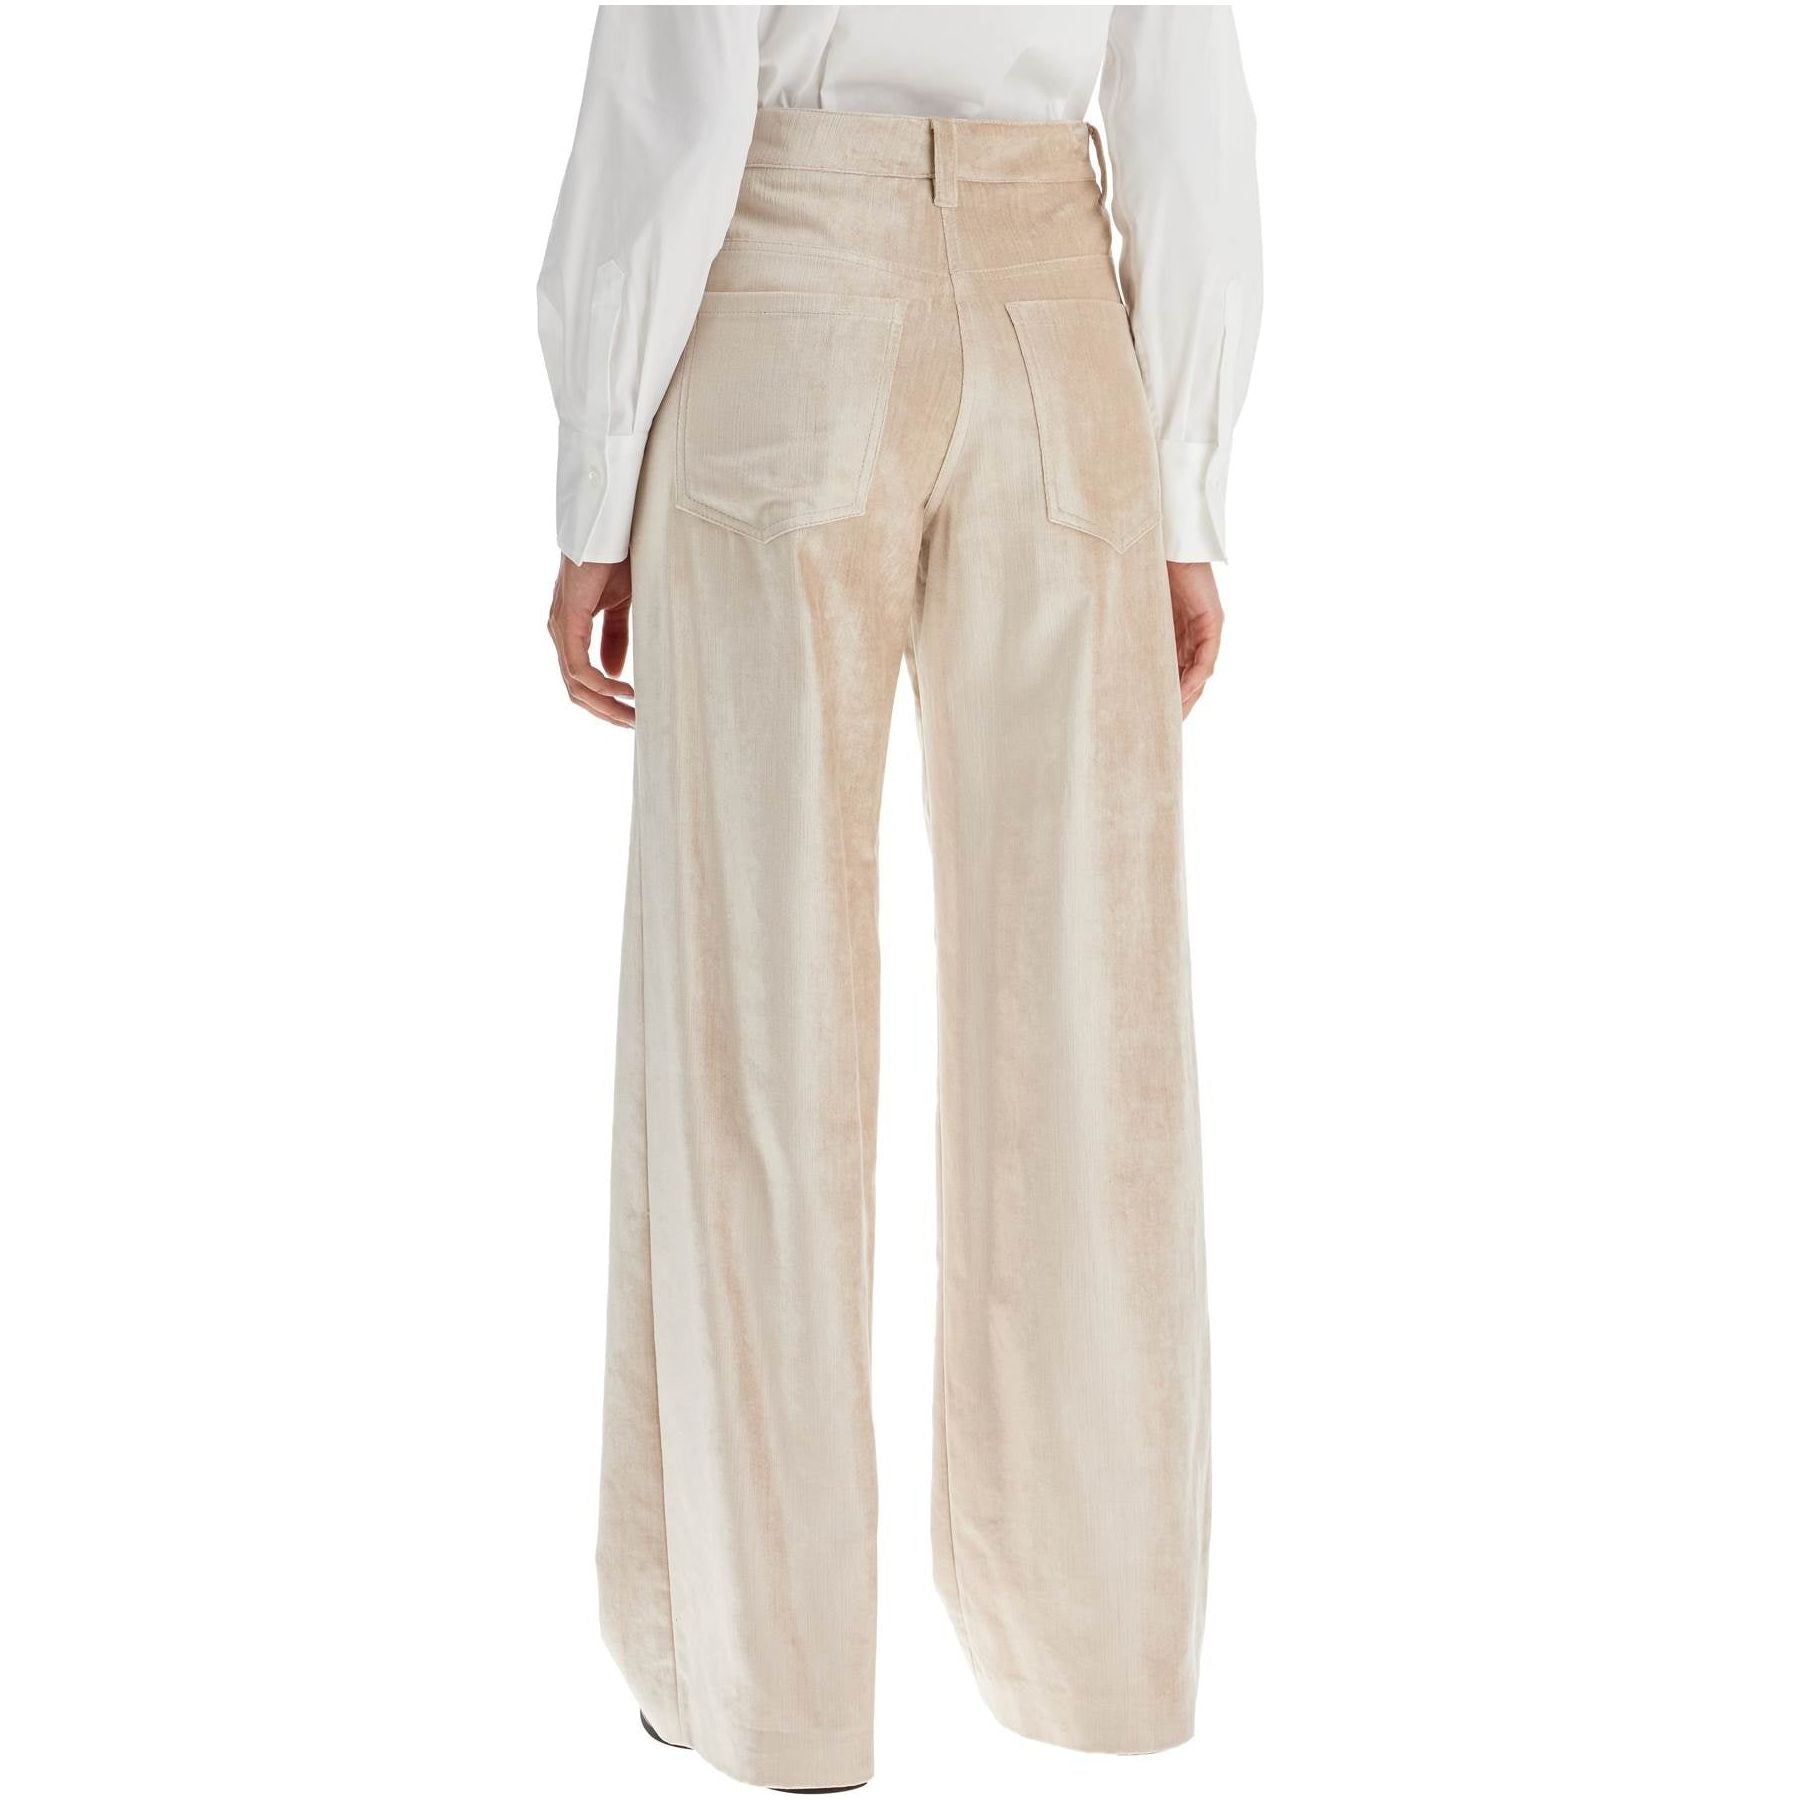 Velvet Pants For A Stylish Look.